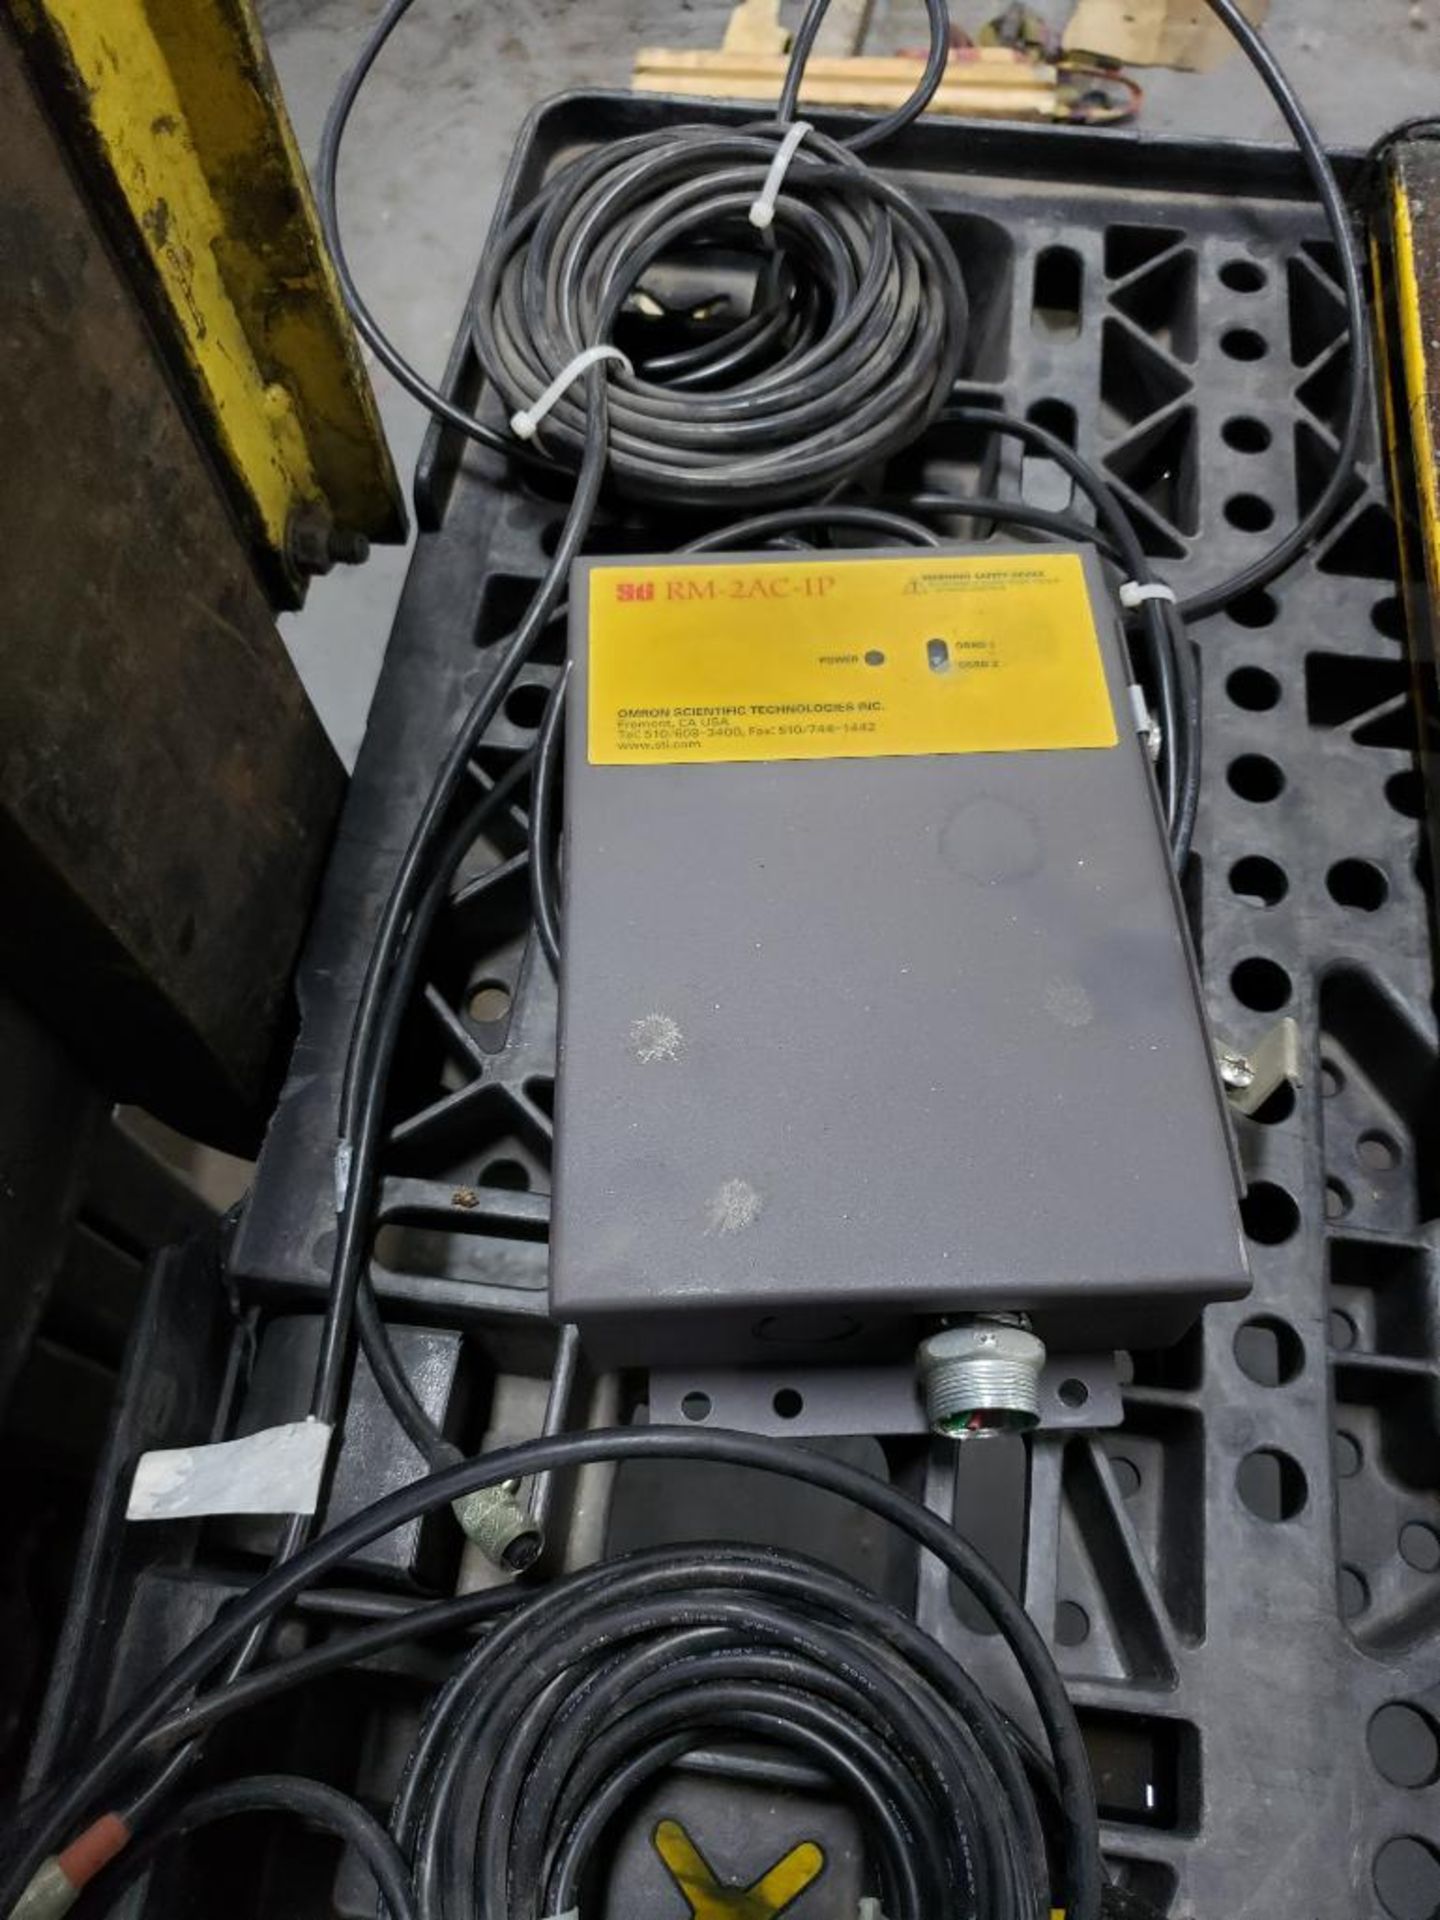 Qty 2 - STI light curtain controller. Model RM-2AC-1P. - Image 3 of 4